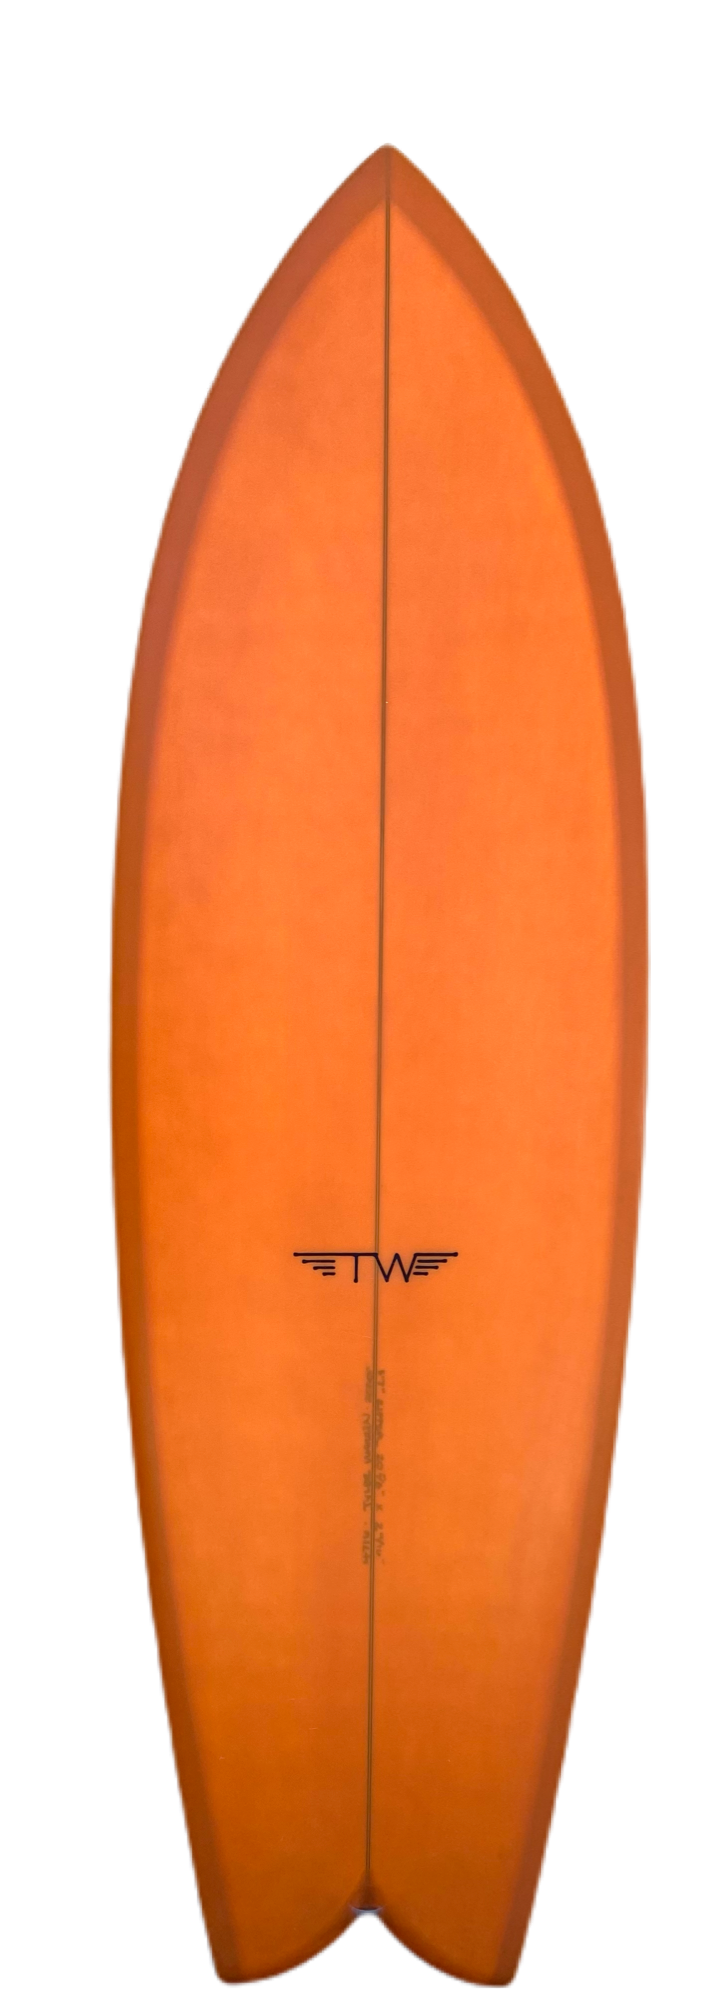 Tyler Warren Zipper Fish 5'7 Sunset Orange - SurfBored